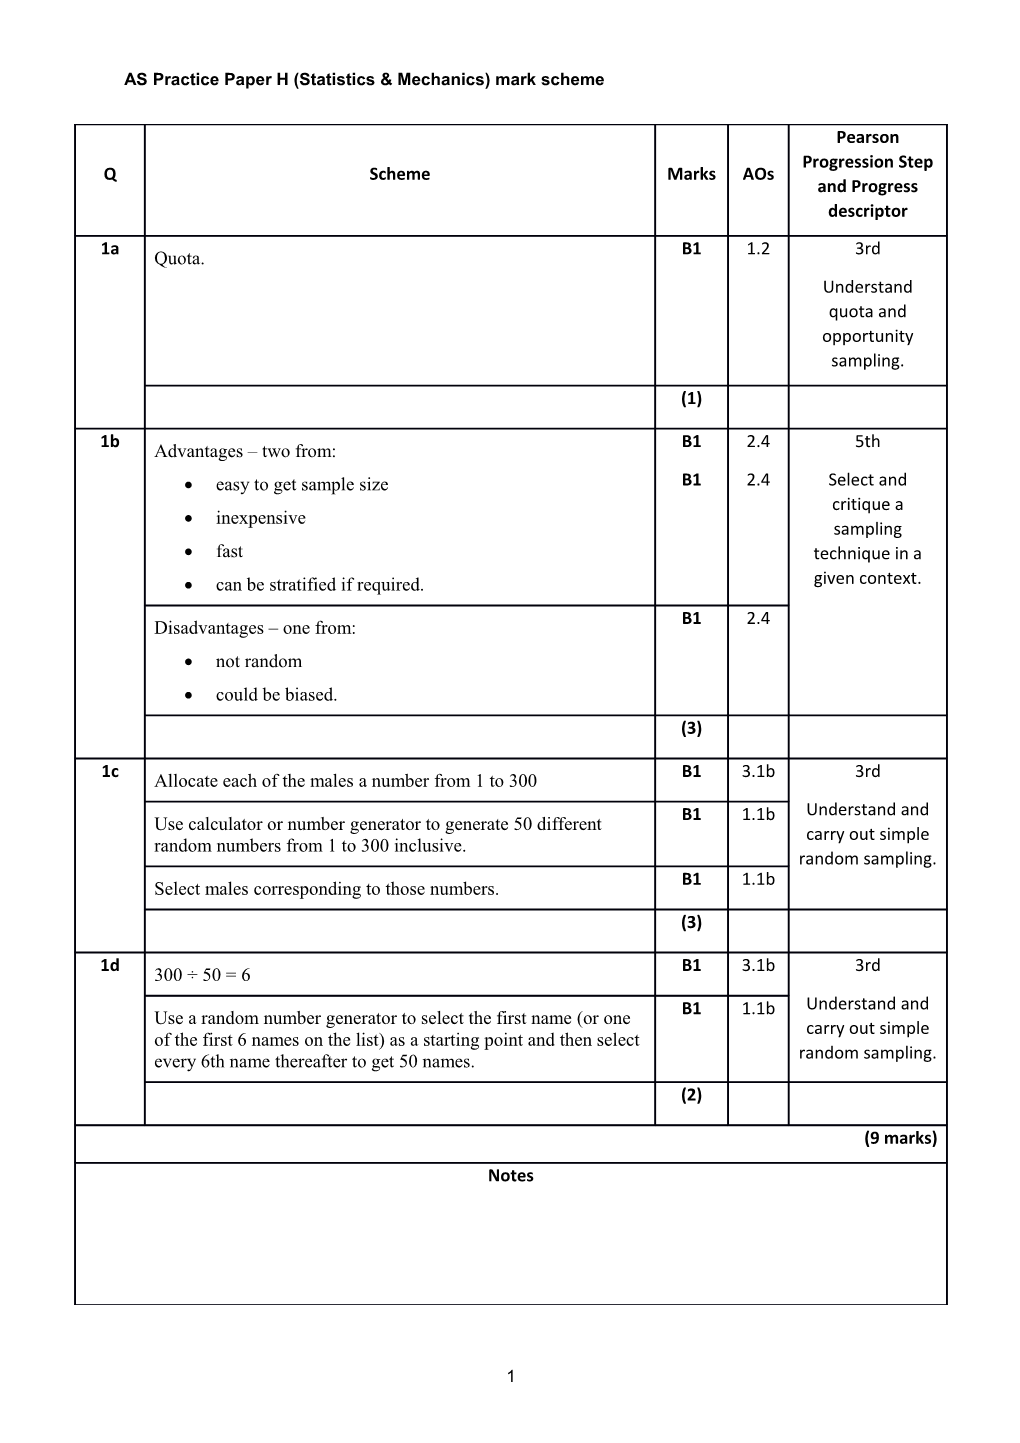 AS Practice Paper H (Statistics & Mechanics) Mark Scheme